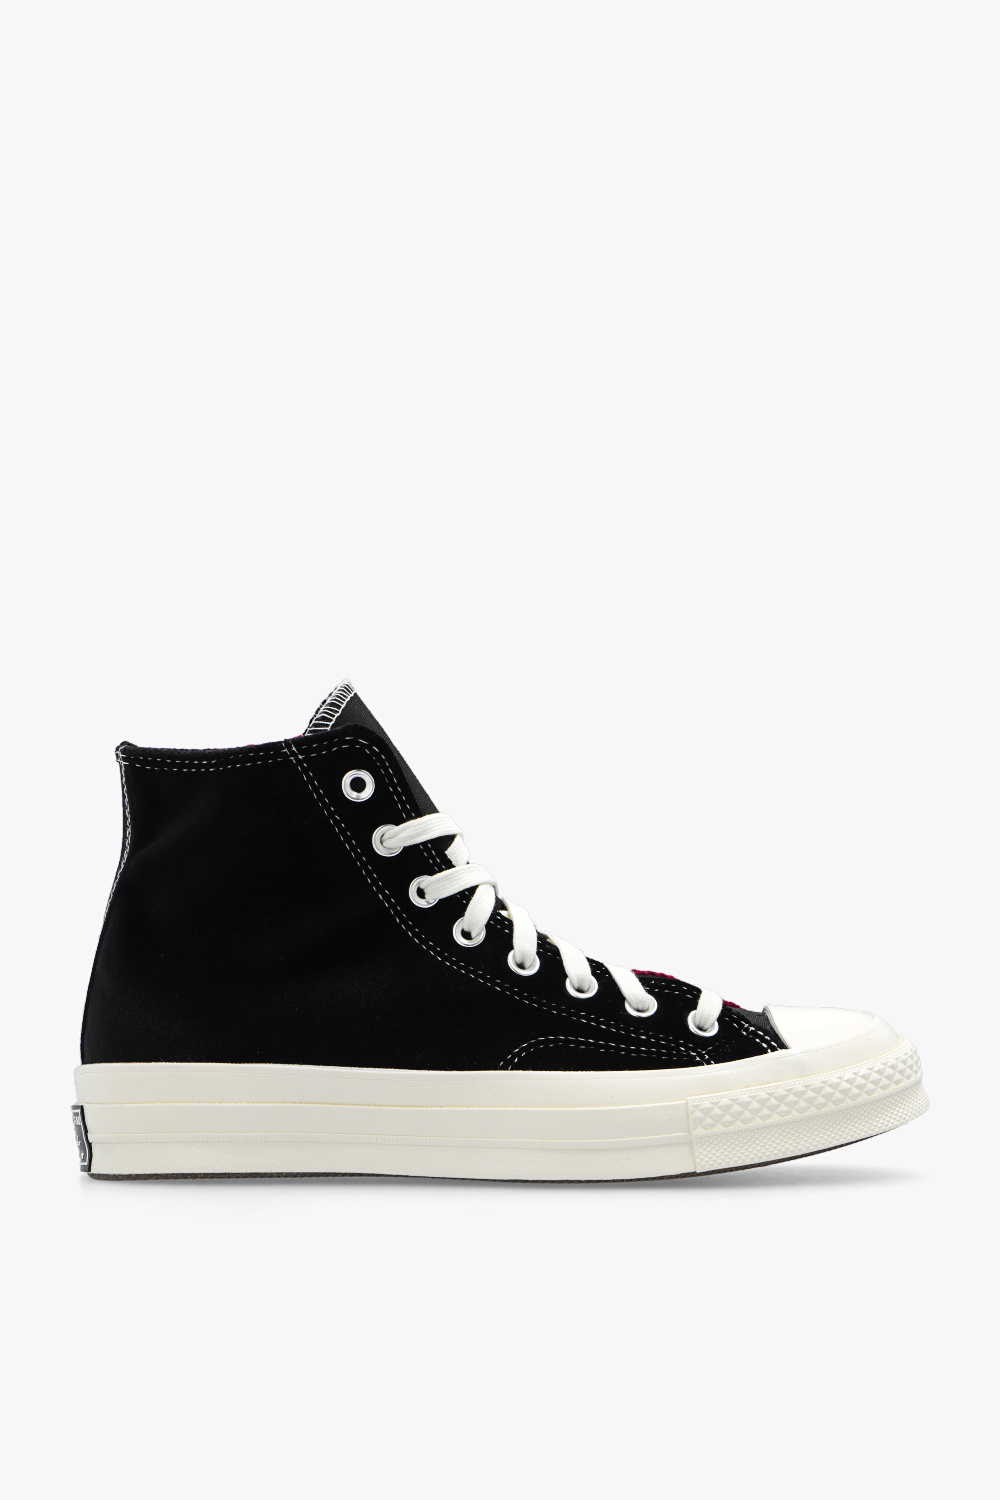 all star pro bb evo release date info - Black 'Converse Chuck Taylor Star Rosa och sneakers med batikmönster - IetpShops Germany